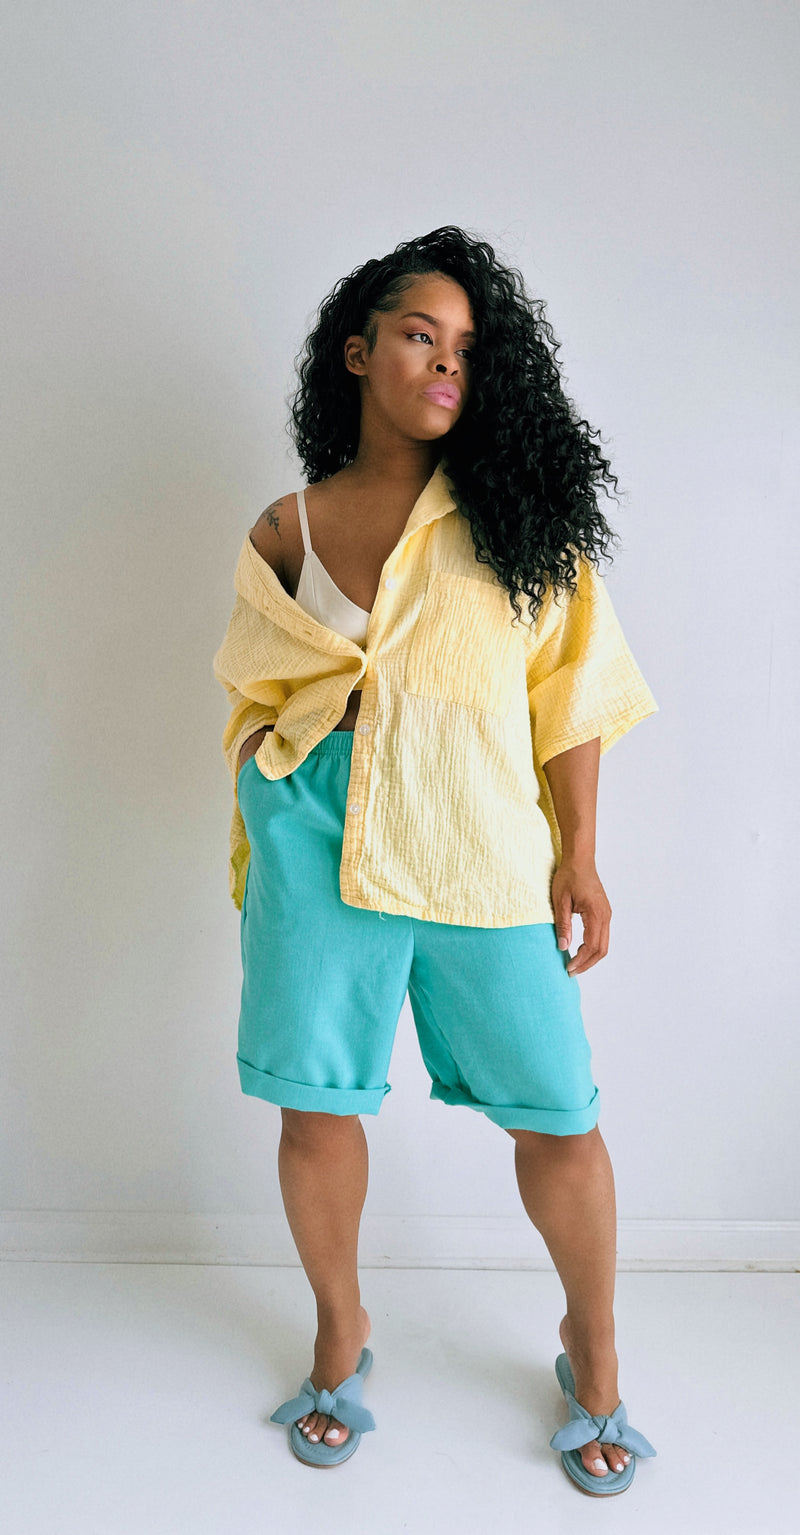 The Pastel Yellow Cotton Linen Top(XL)